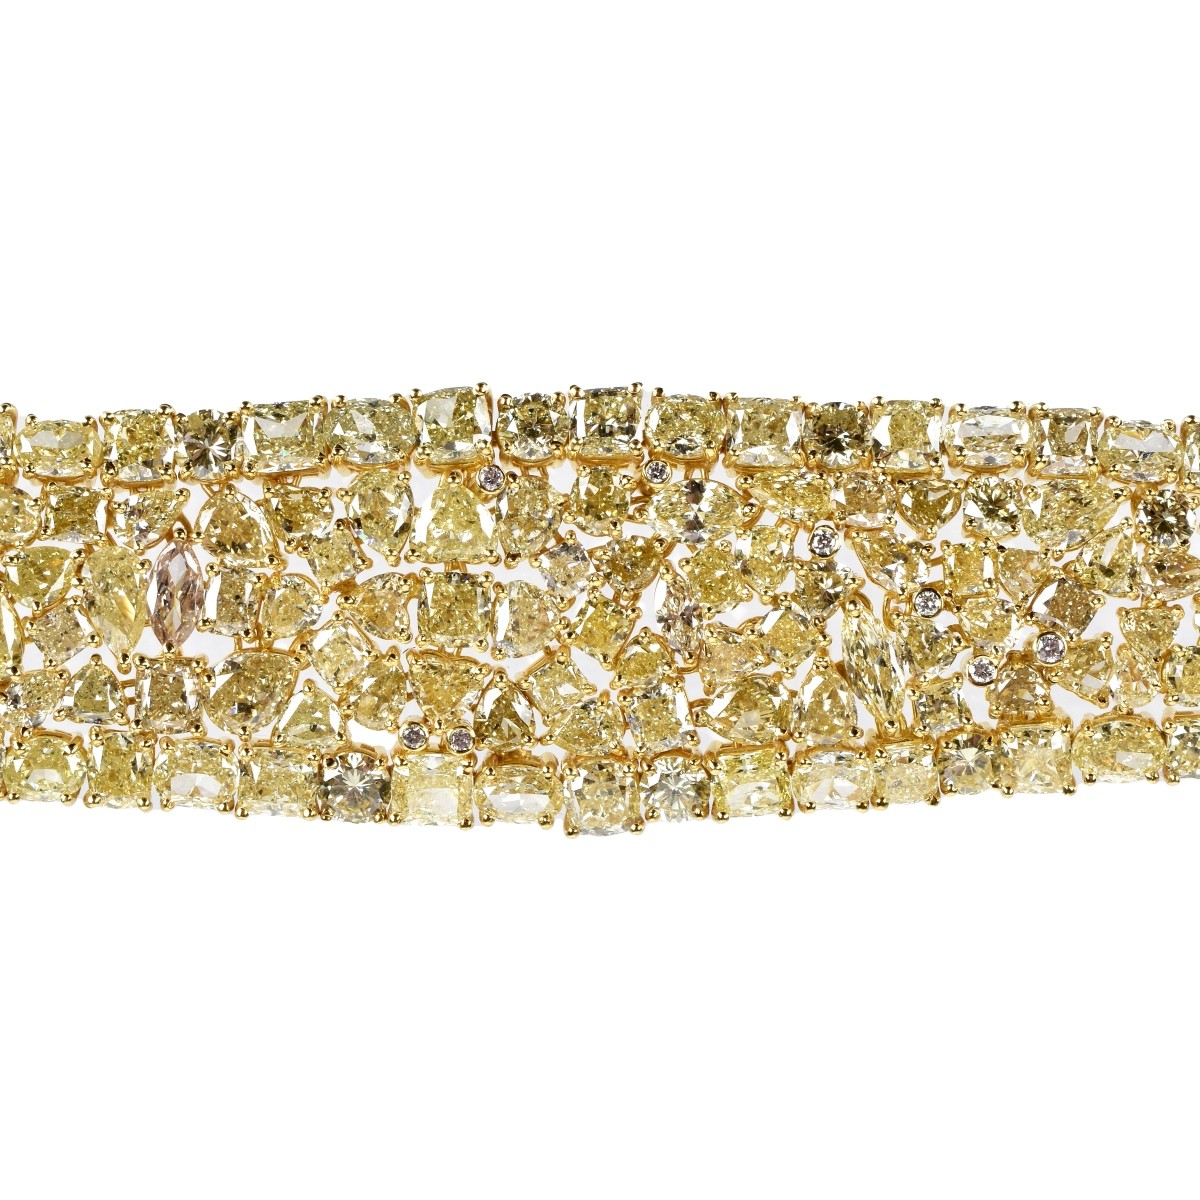 Fancy Yellow Diamond and 18K Bracelet